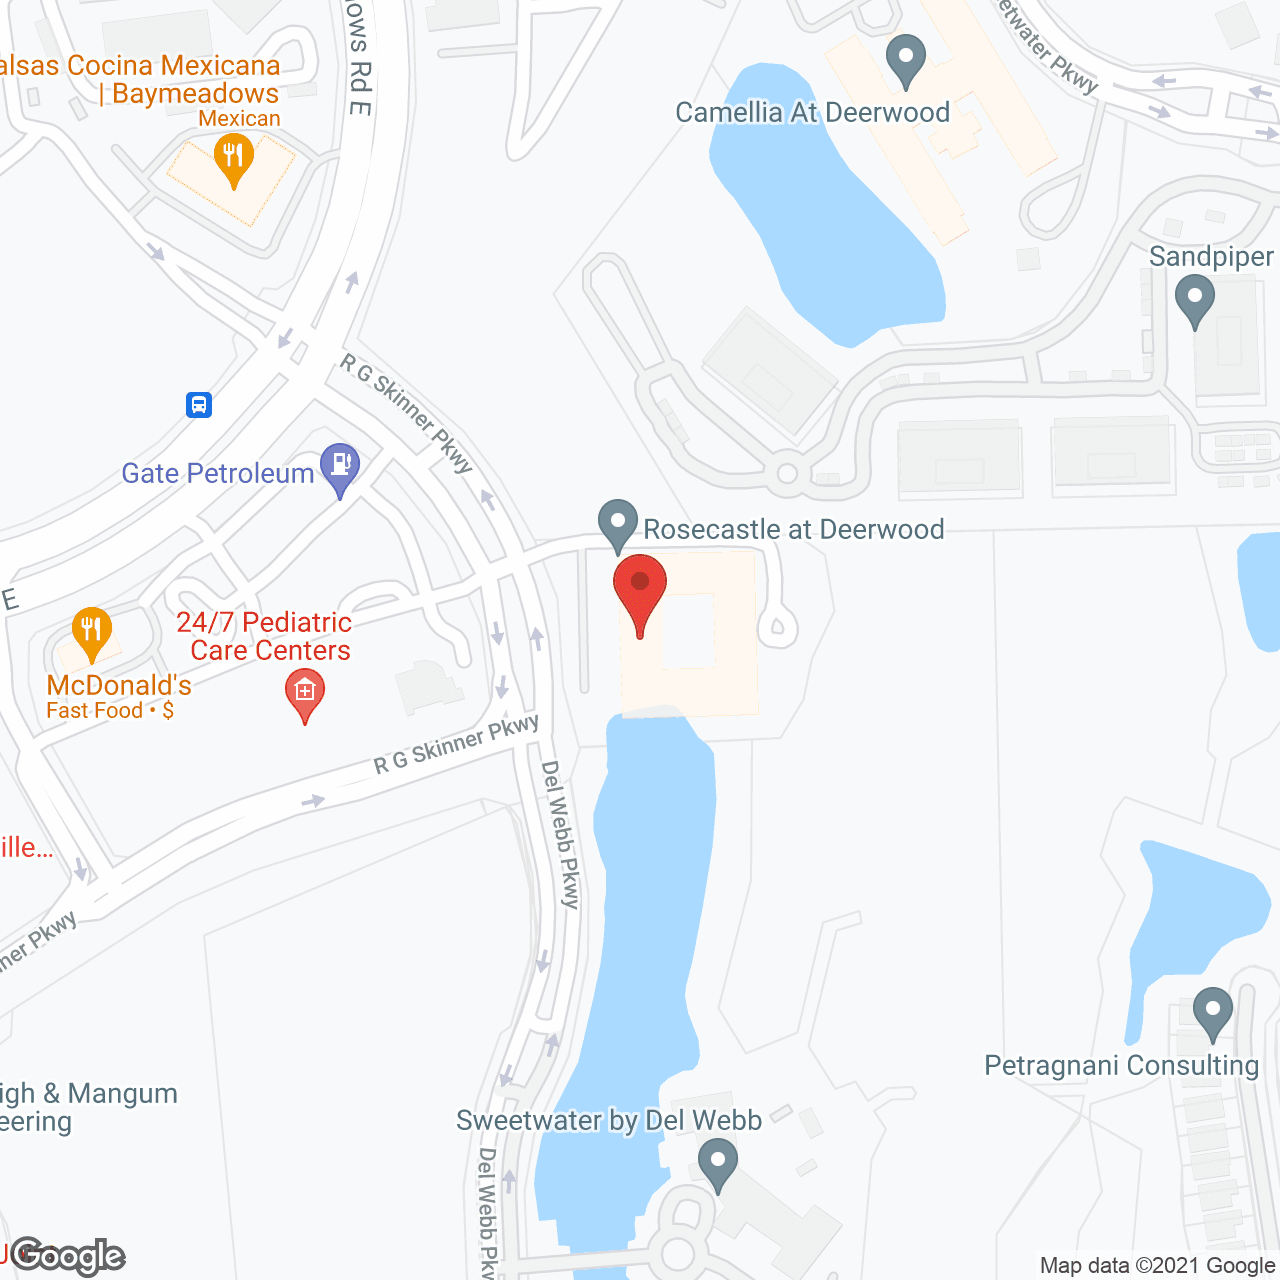 Rosecastle at Deerwood in google map